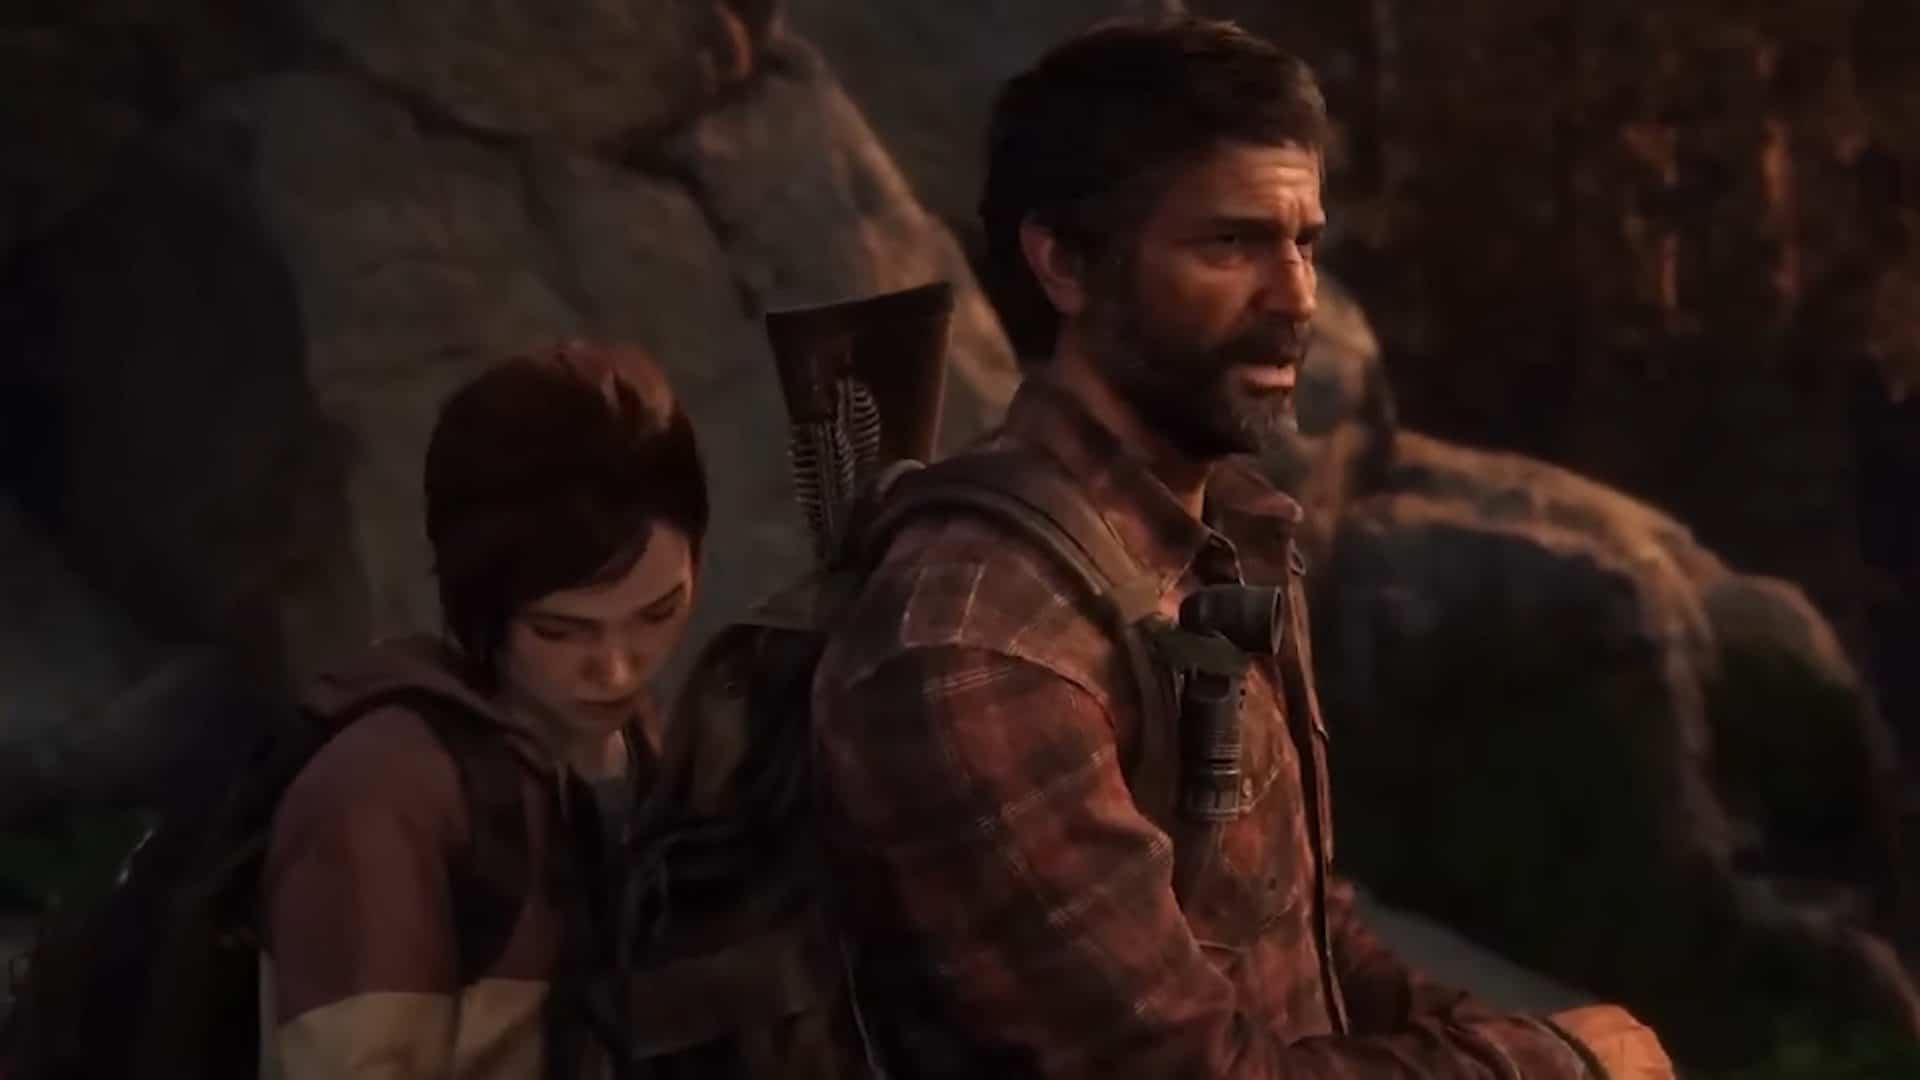 Joel and Ellie in The Last of Us game